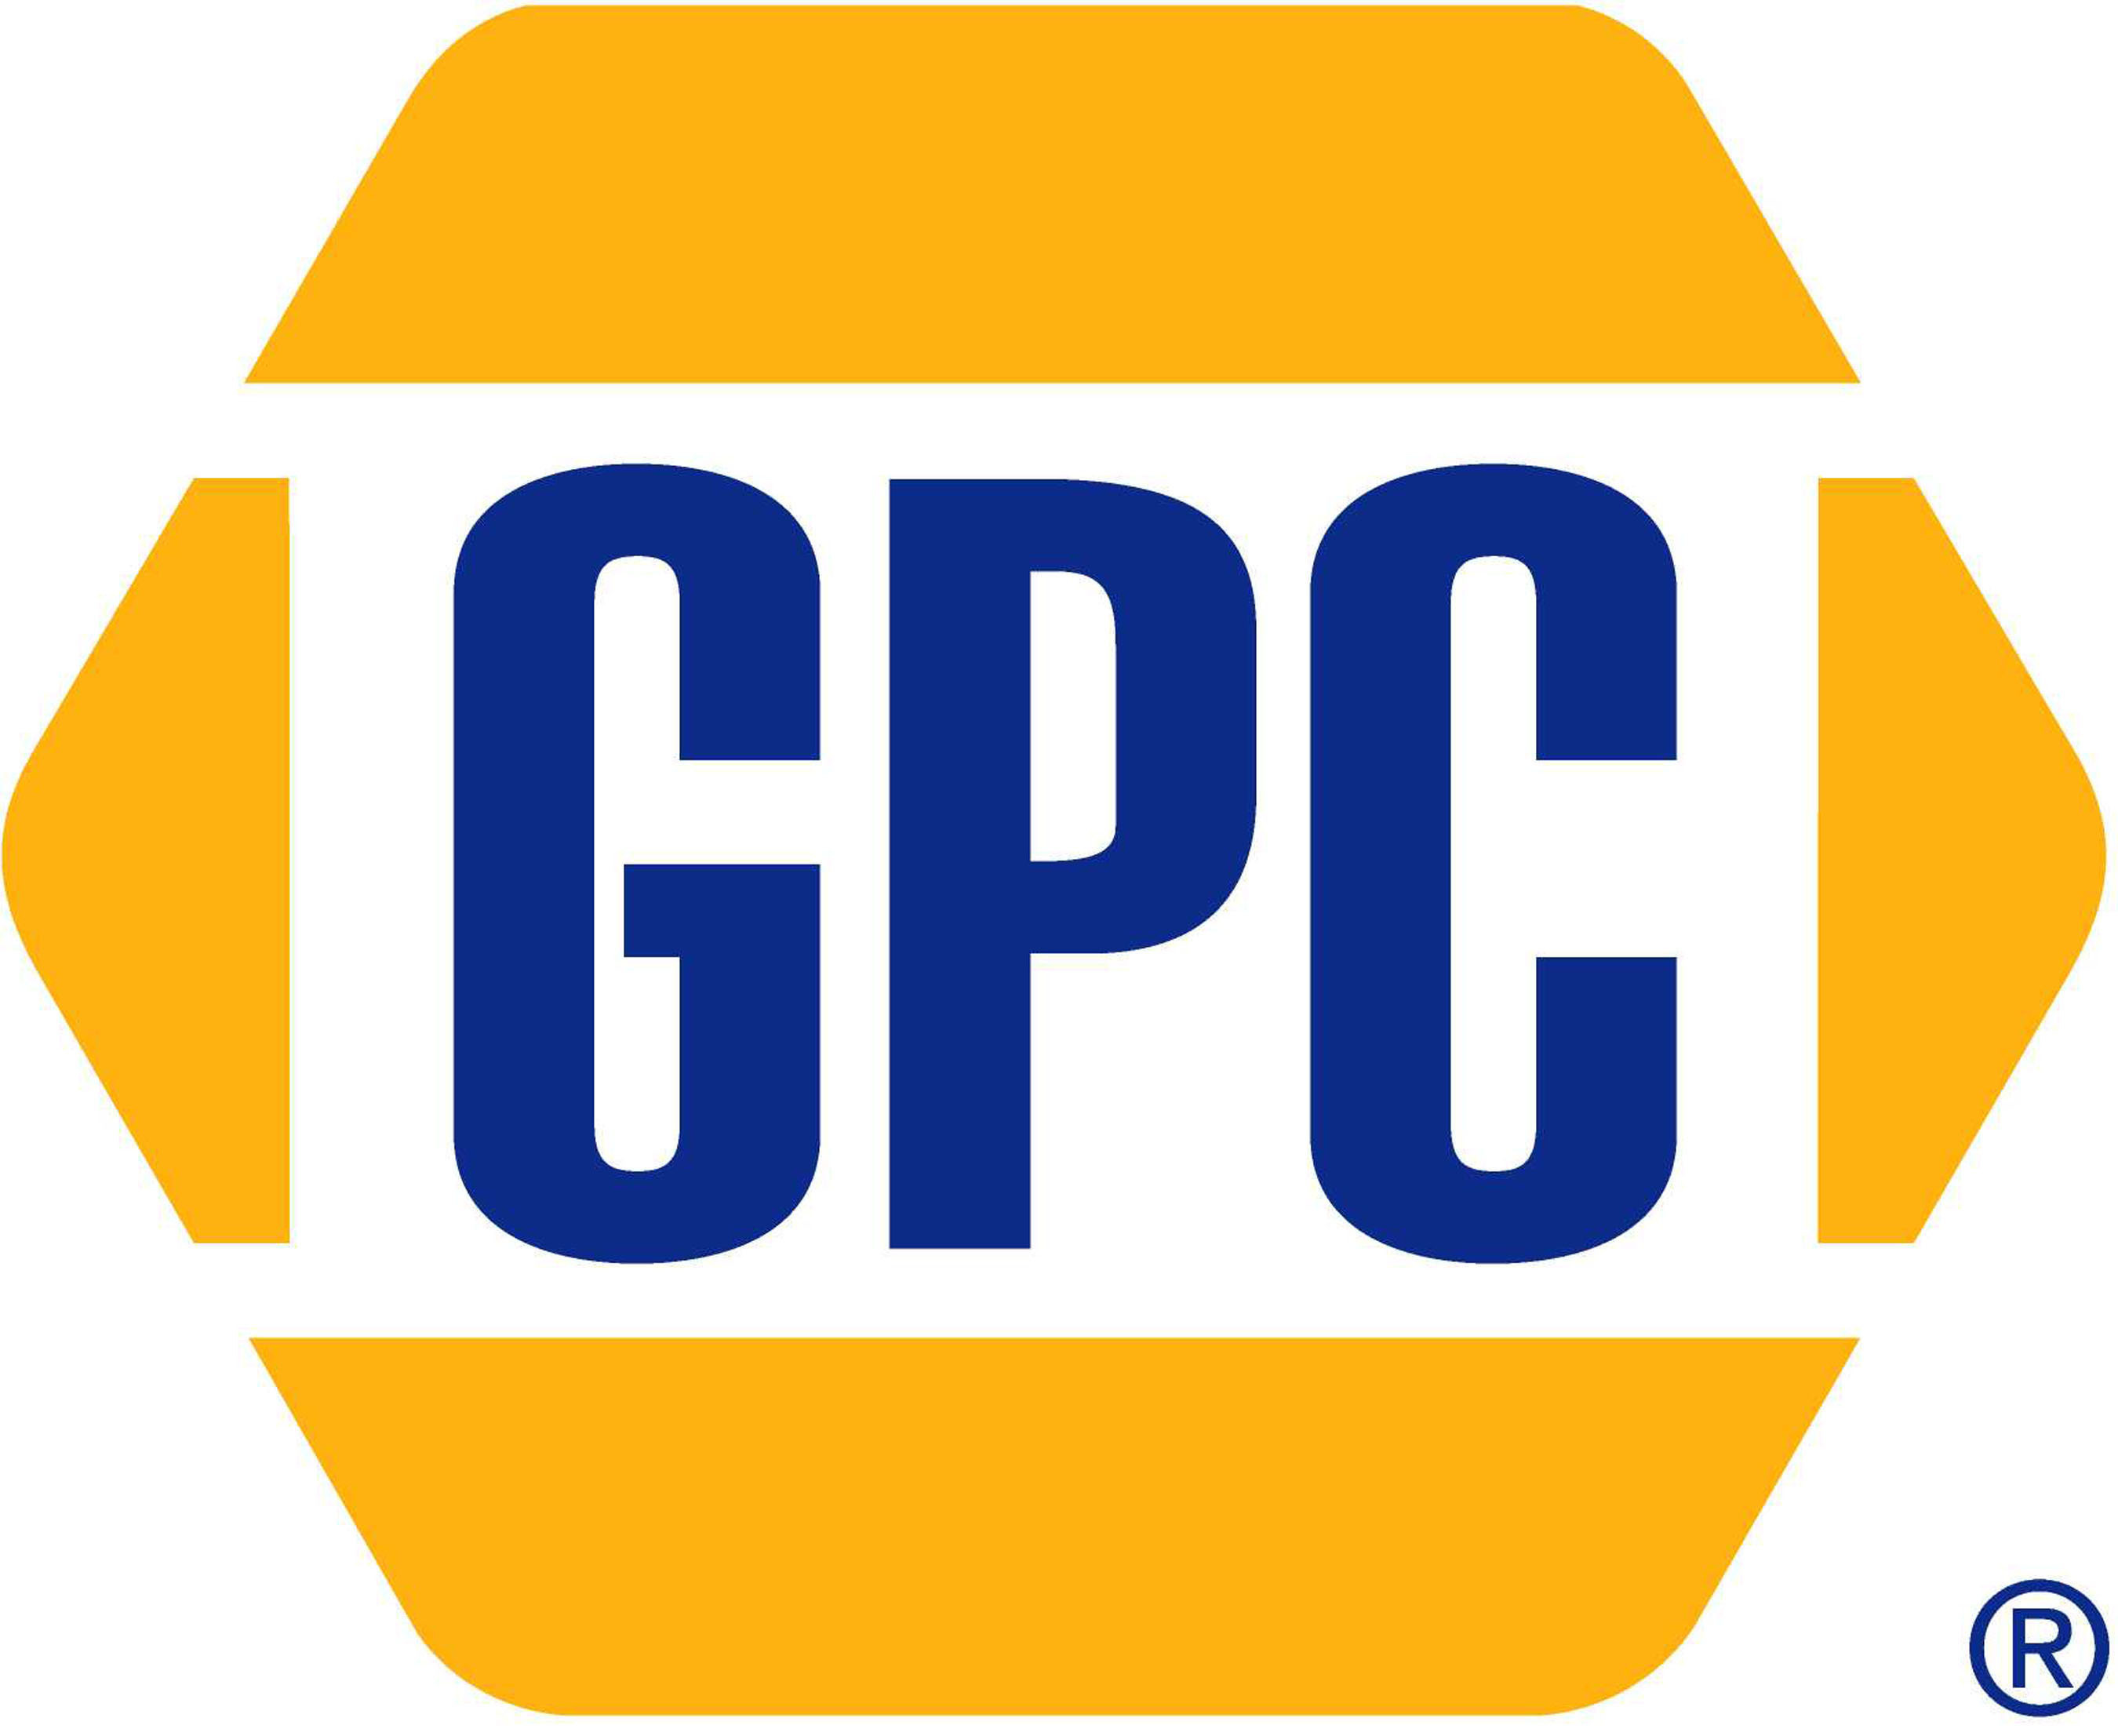 Genuine Parts Company logo